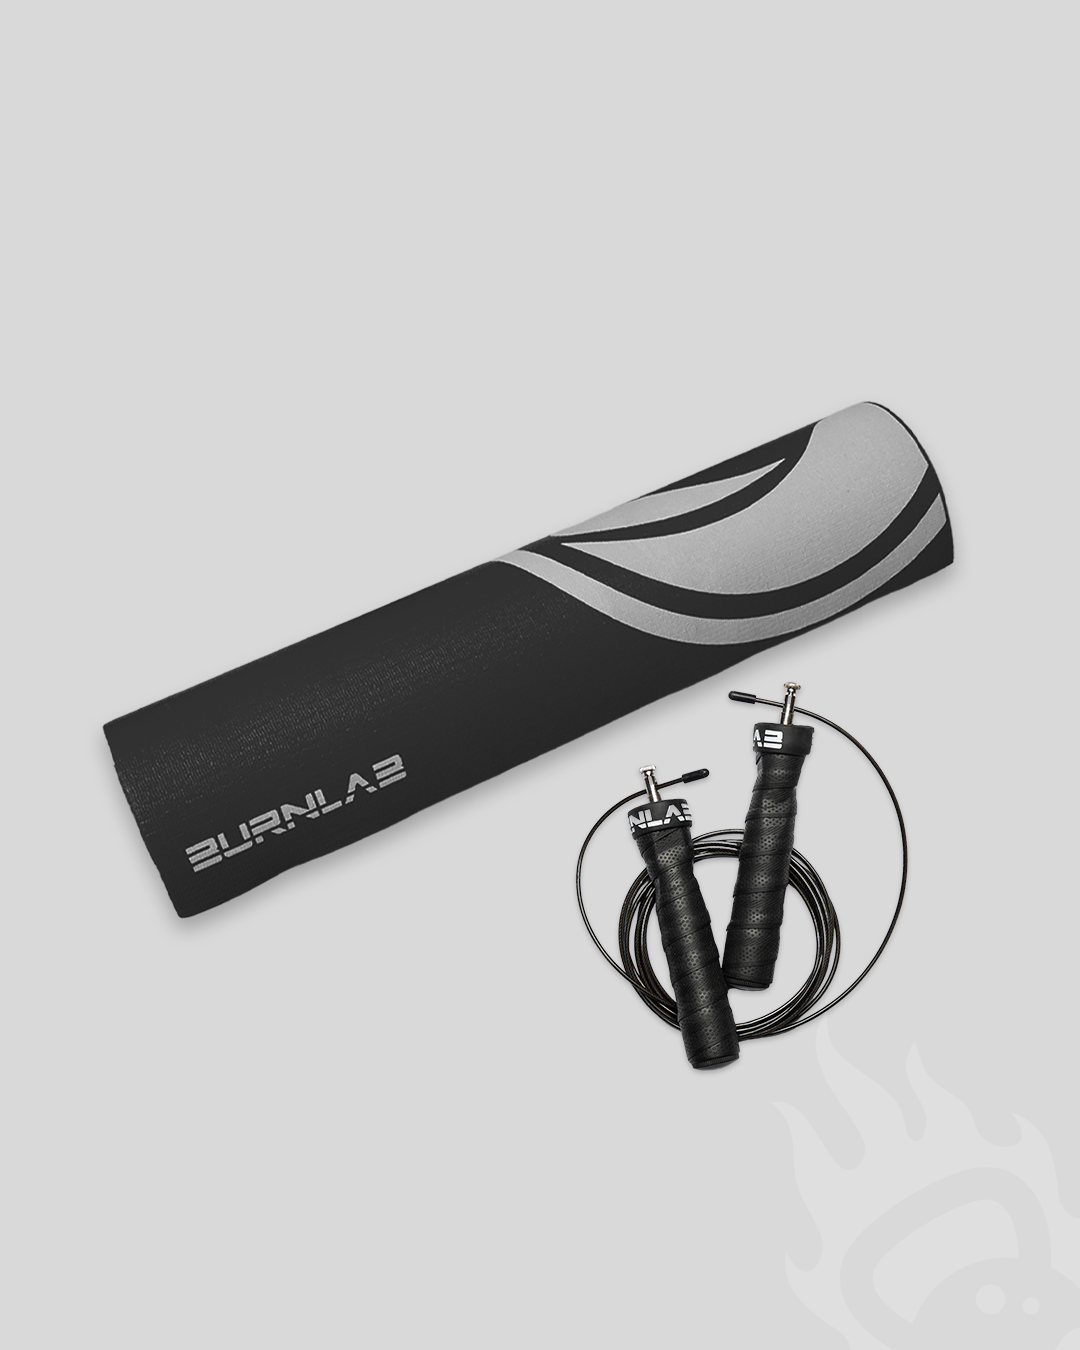 Yoga Mat and Antislip Performance Skipping Rope - Burnlab.Co